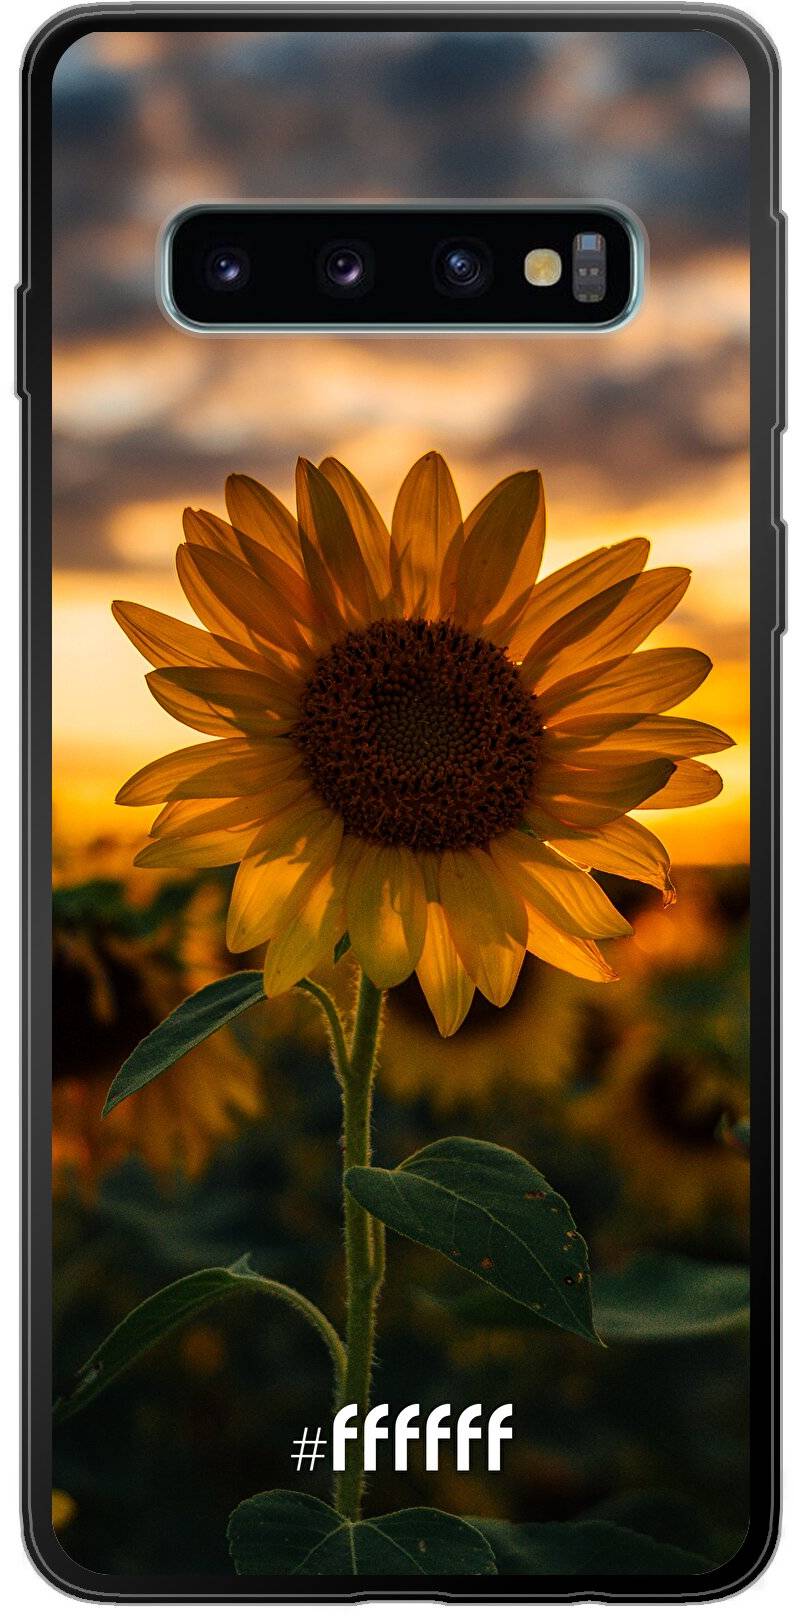 Sunset Sunflower Galaxy S10